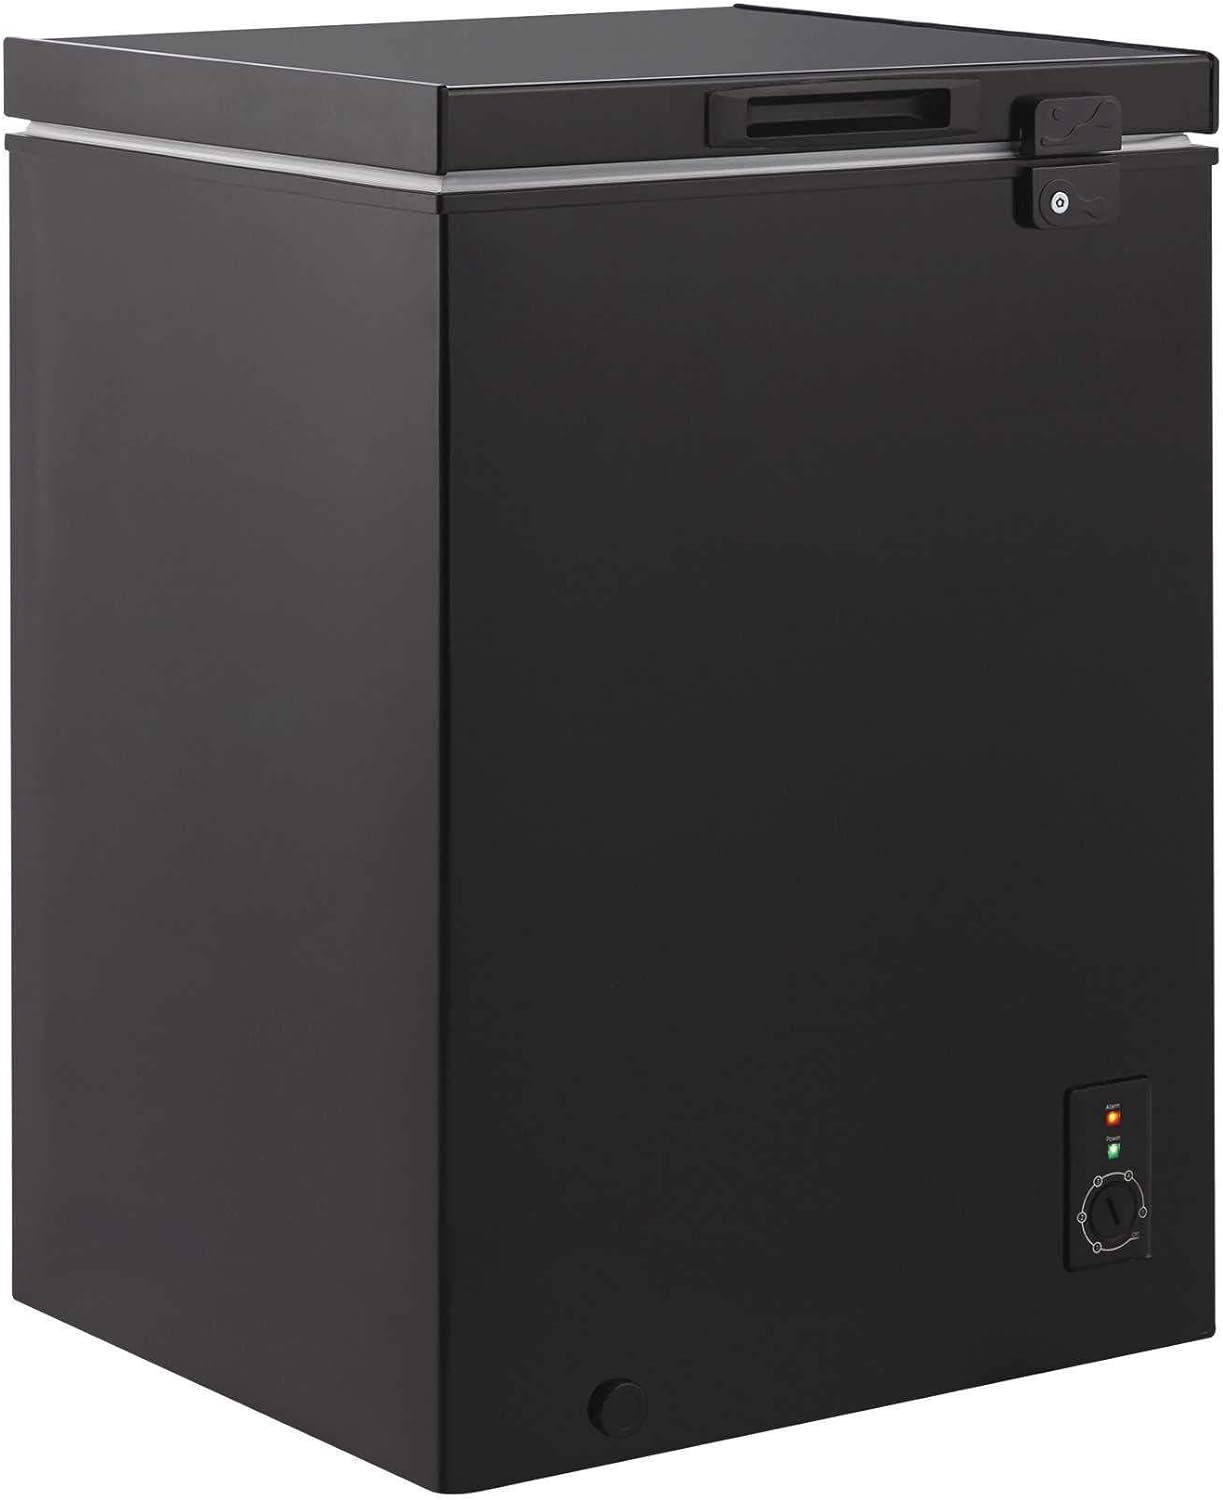 Candy CMCH100BUK Freestanding Chest Freezer, 98L Total Capacity, Black [Energy Class F] 1334